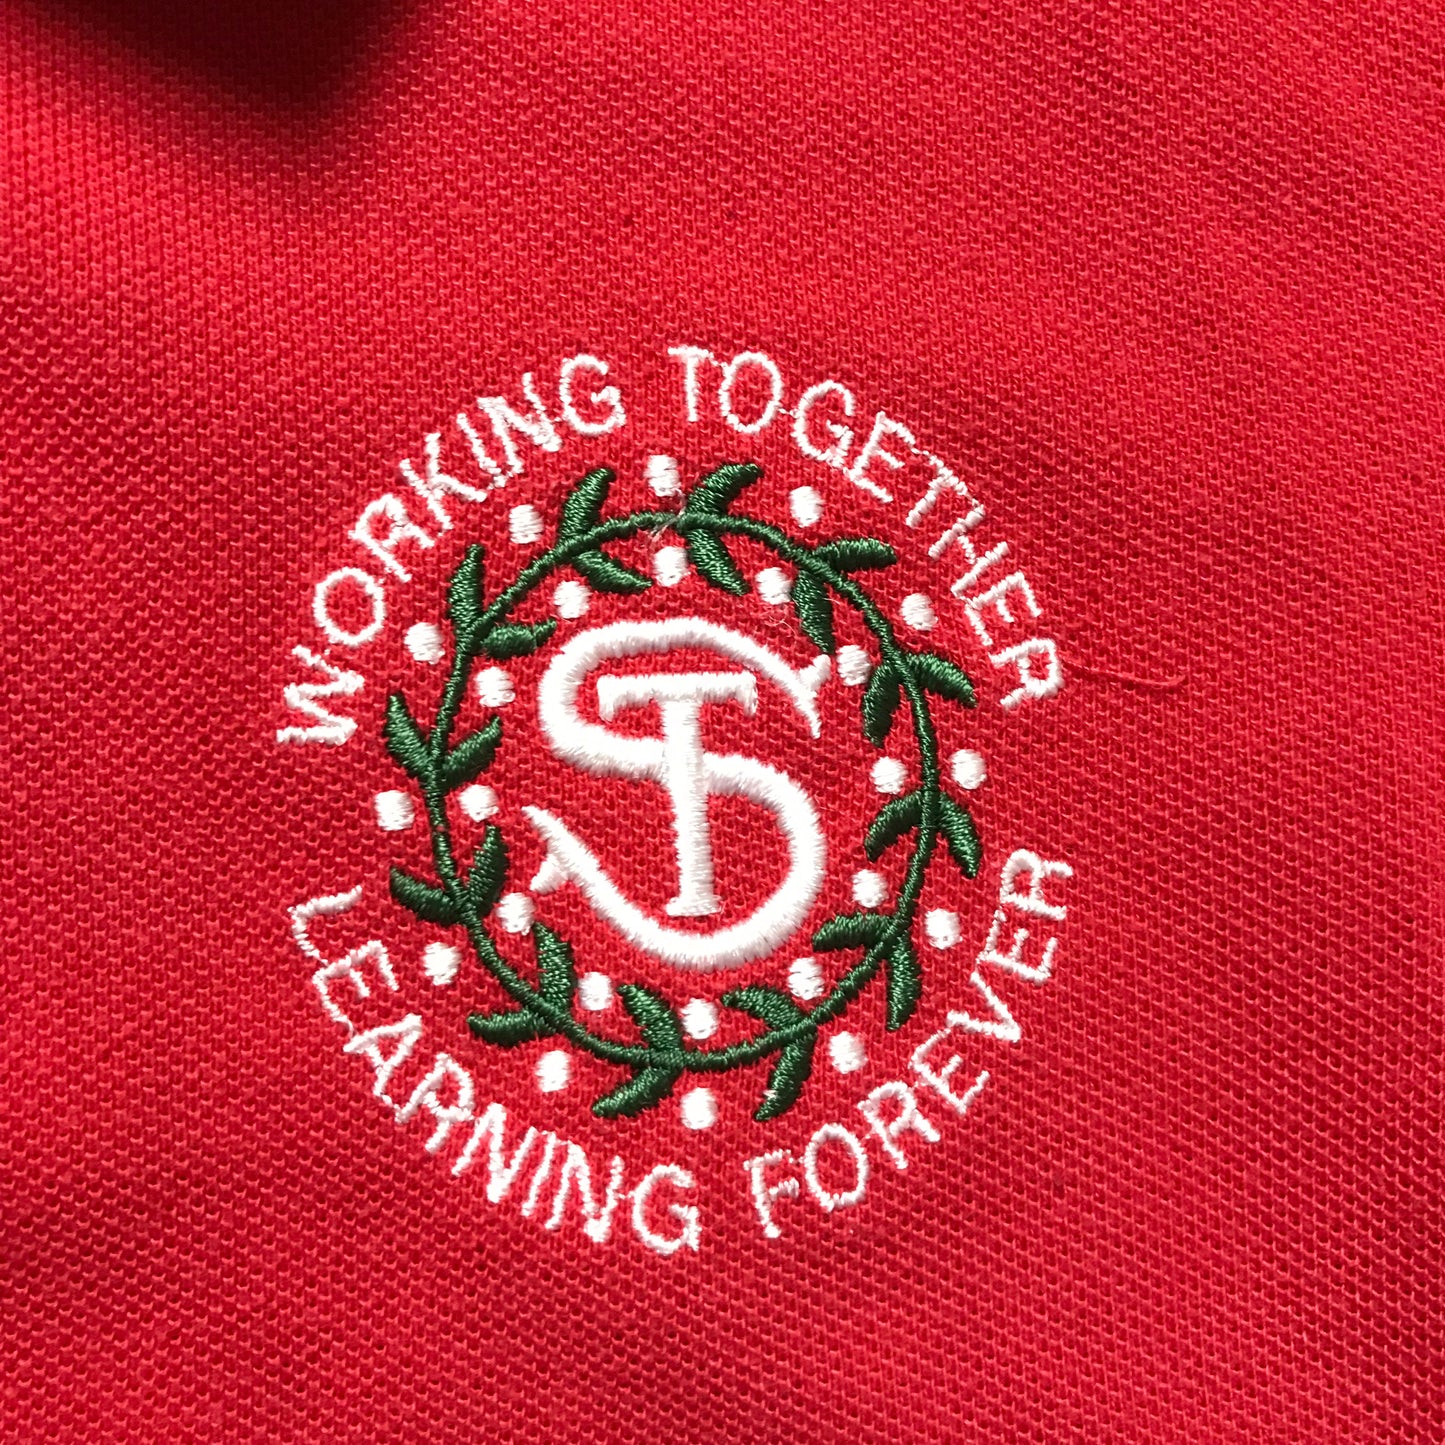 St. Thomas' Red Polo Shirt